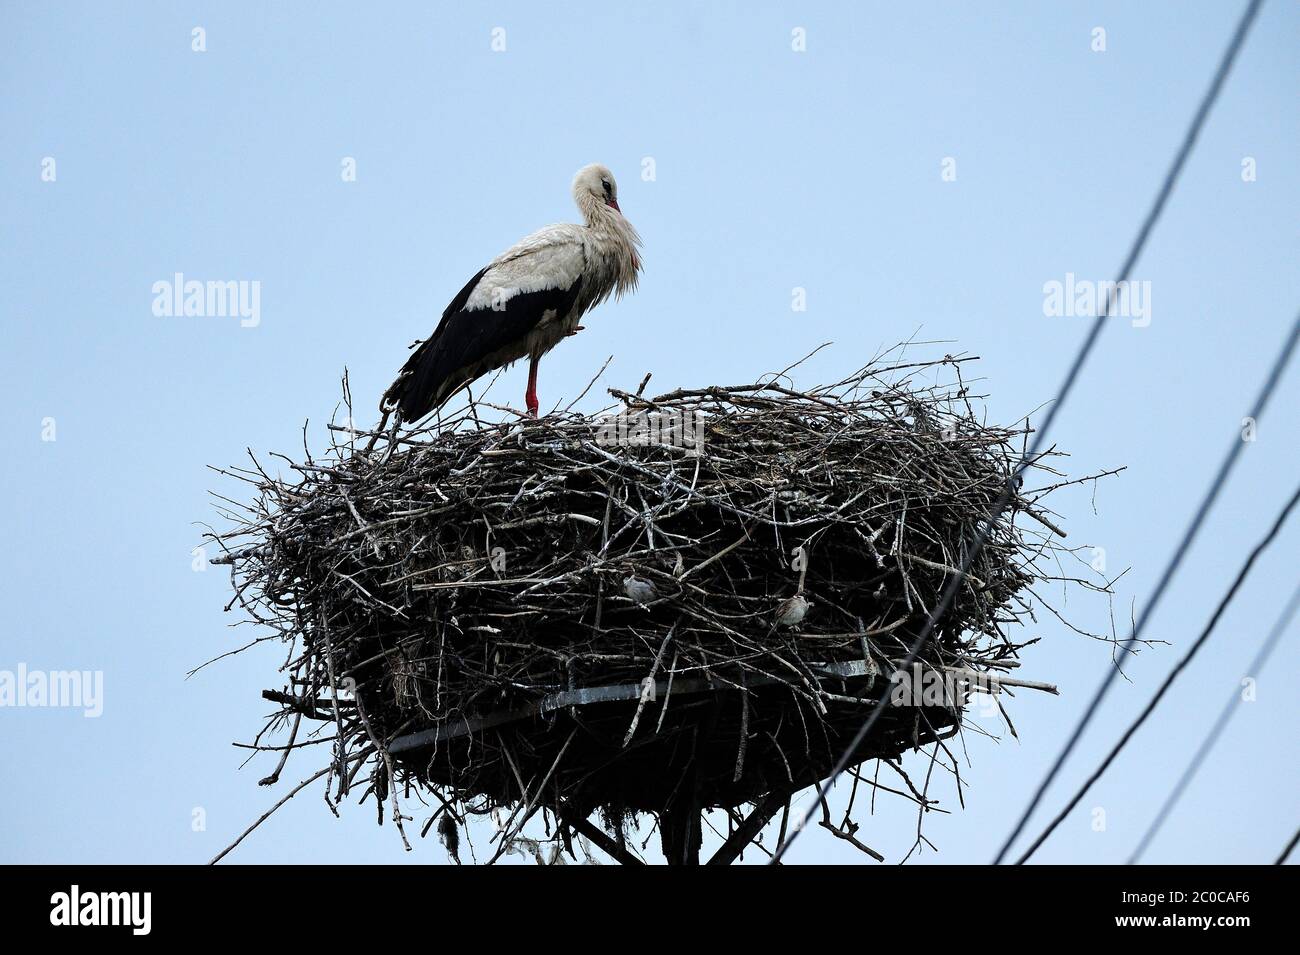 animals, stork, nest, migratory birds, White Stork, Ciconia ciconia, neognathic birds, vertebrates, photo Kazimierz Jurewicz, Stock Photo